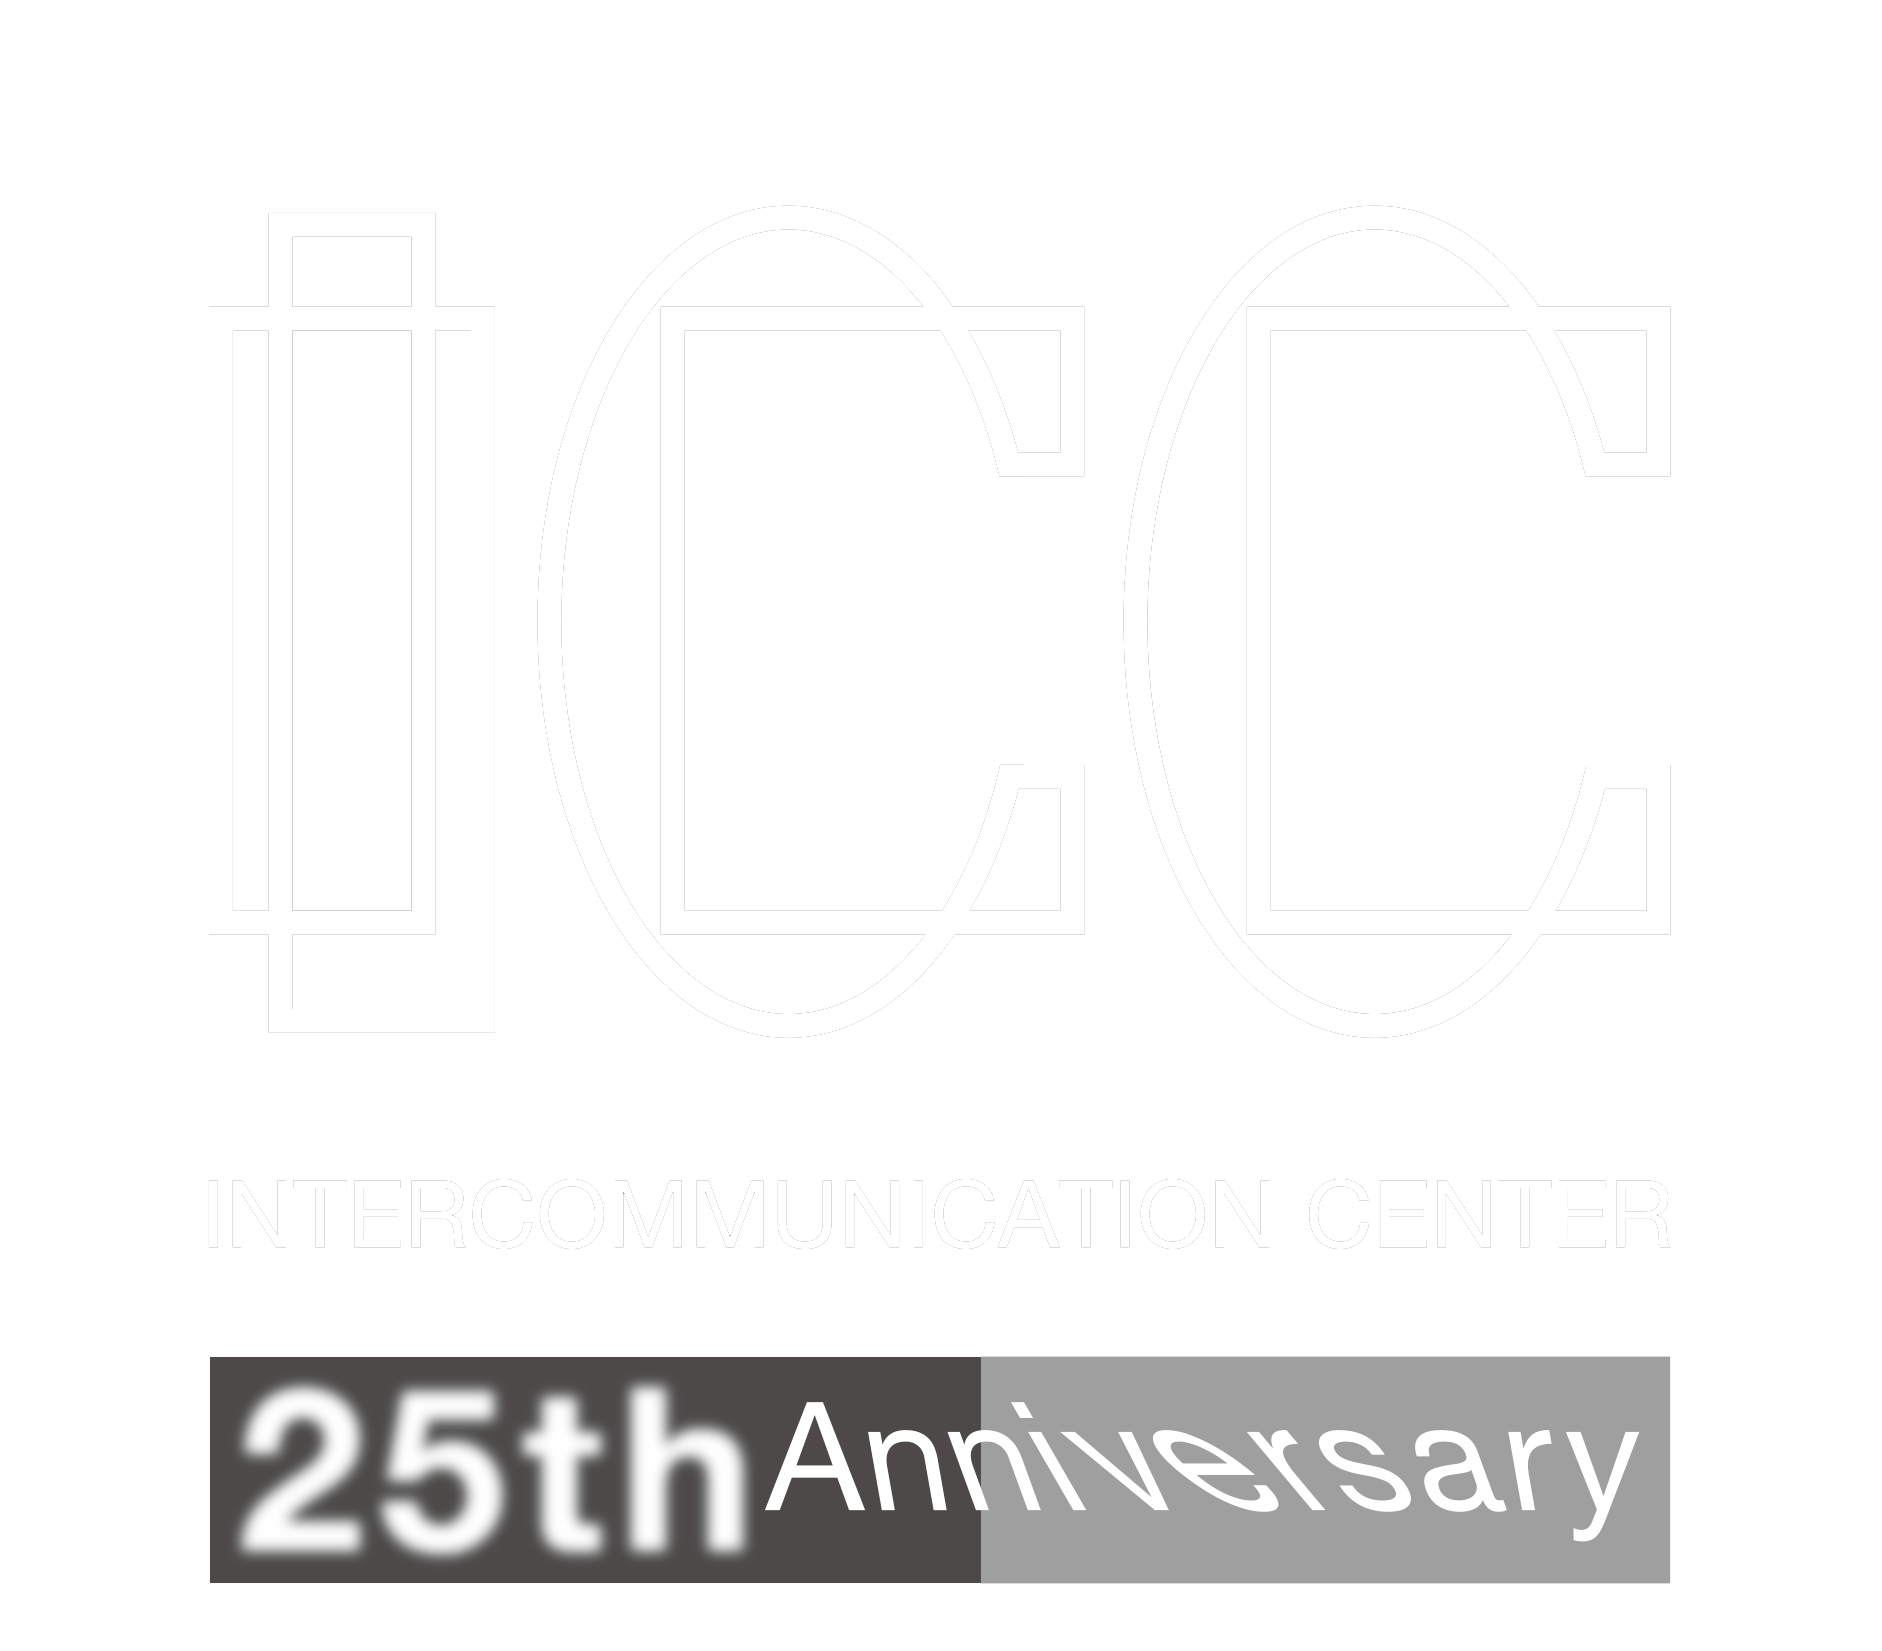 NTT InterCommunication Center 25th Anniversary